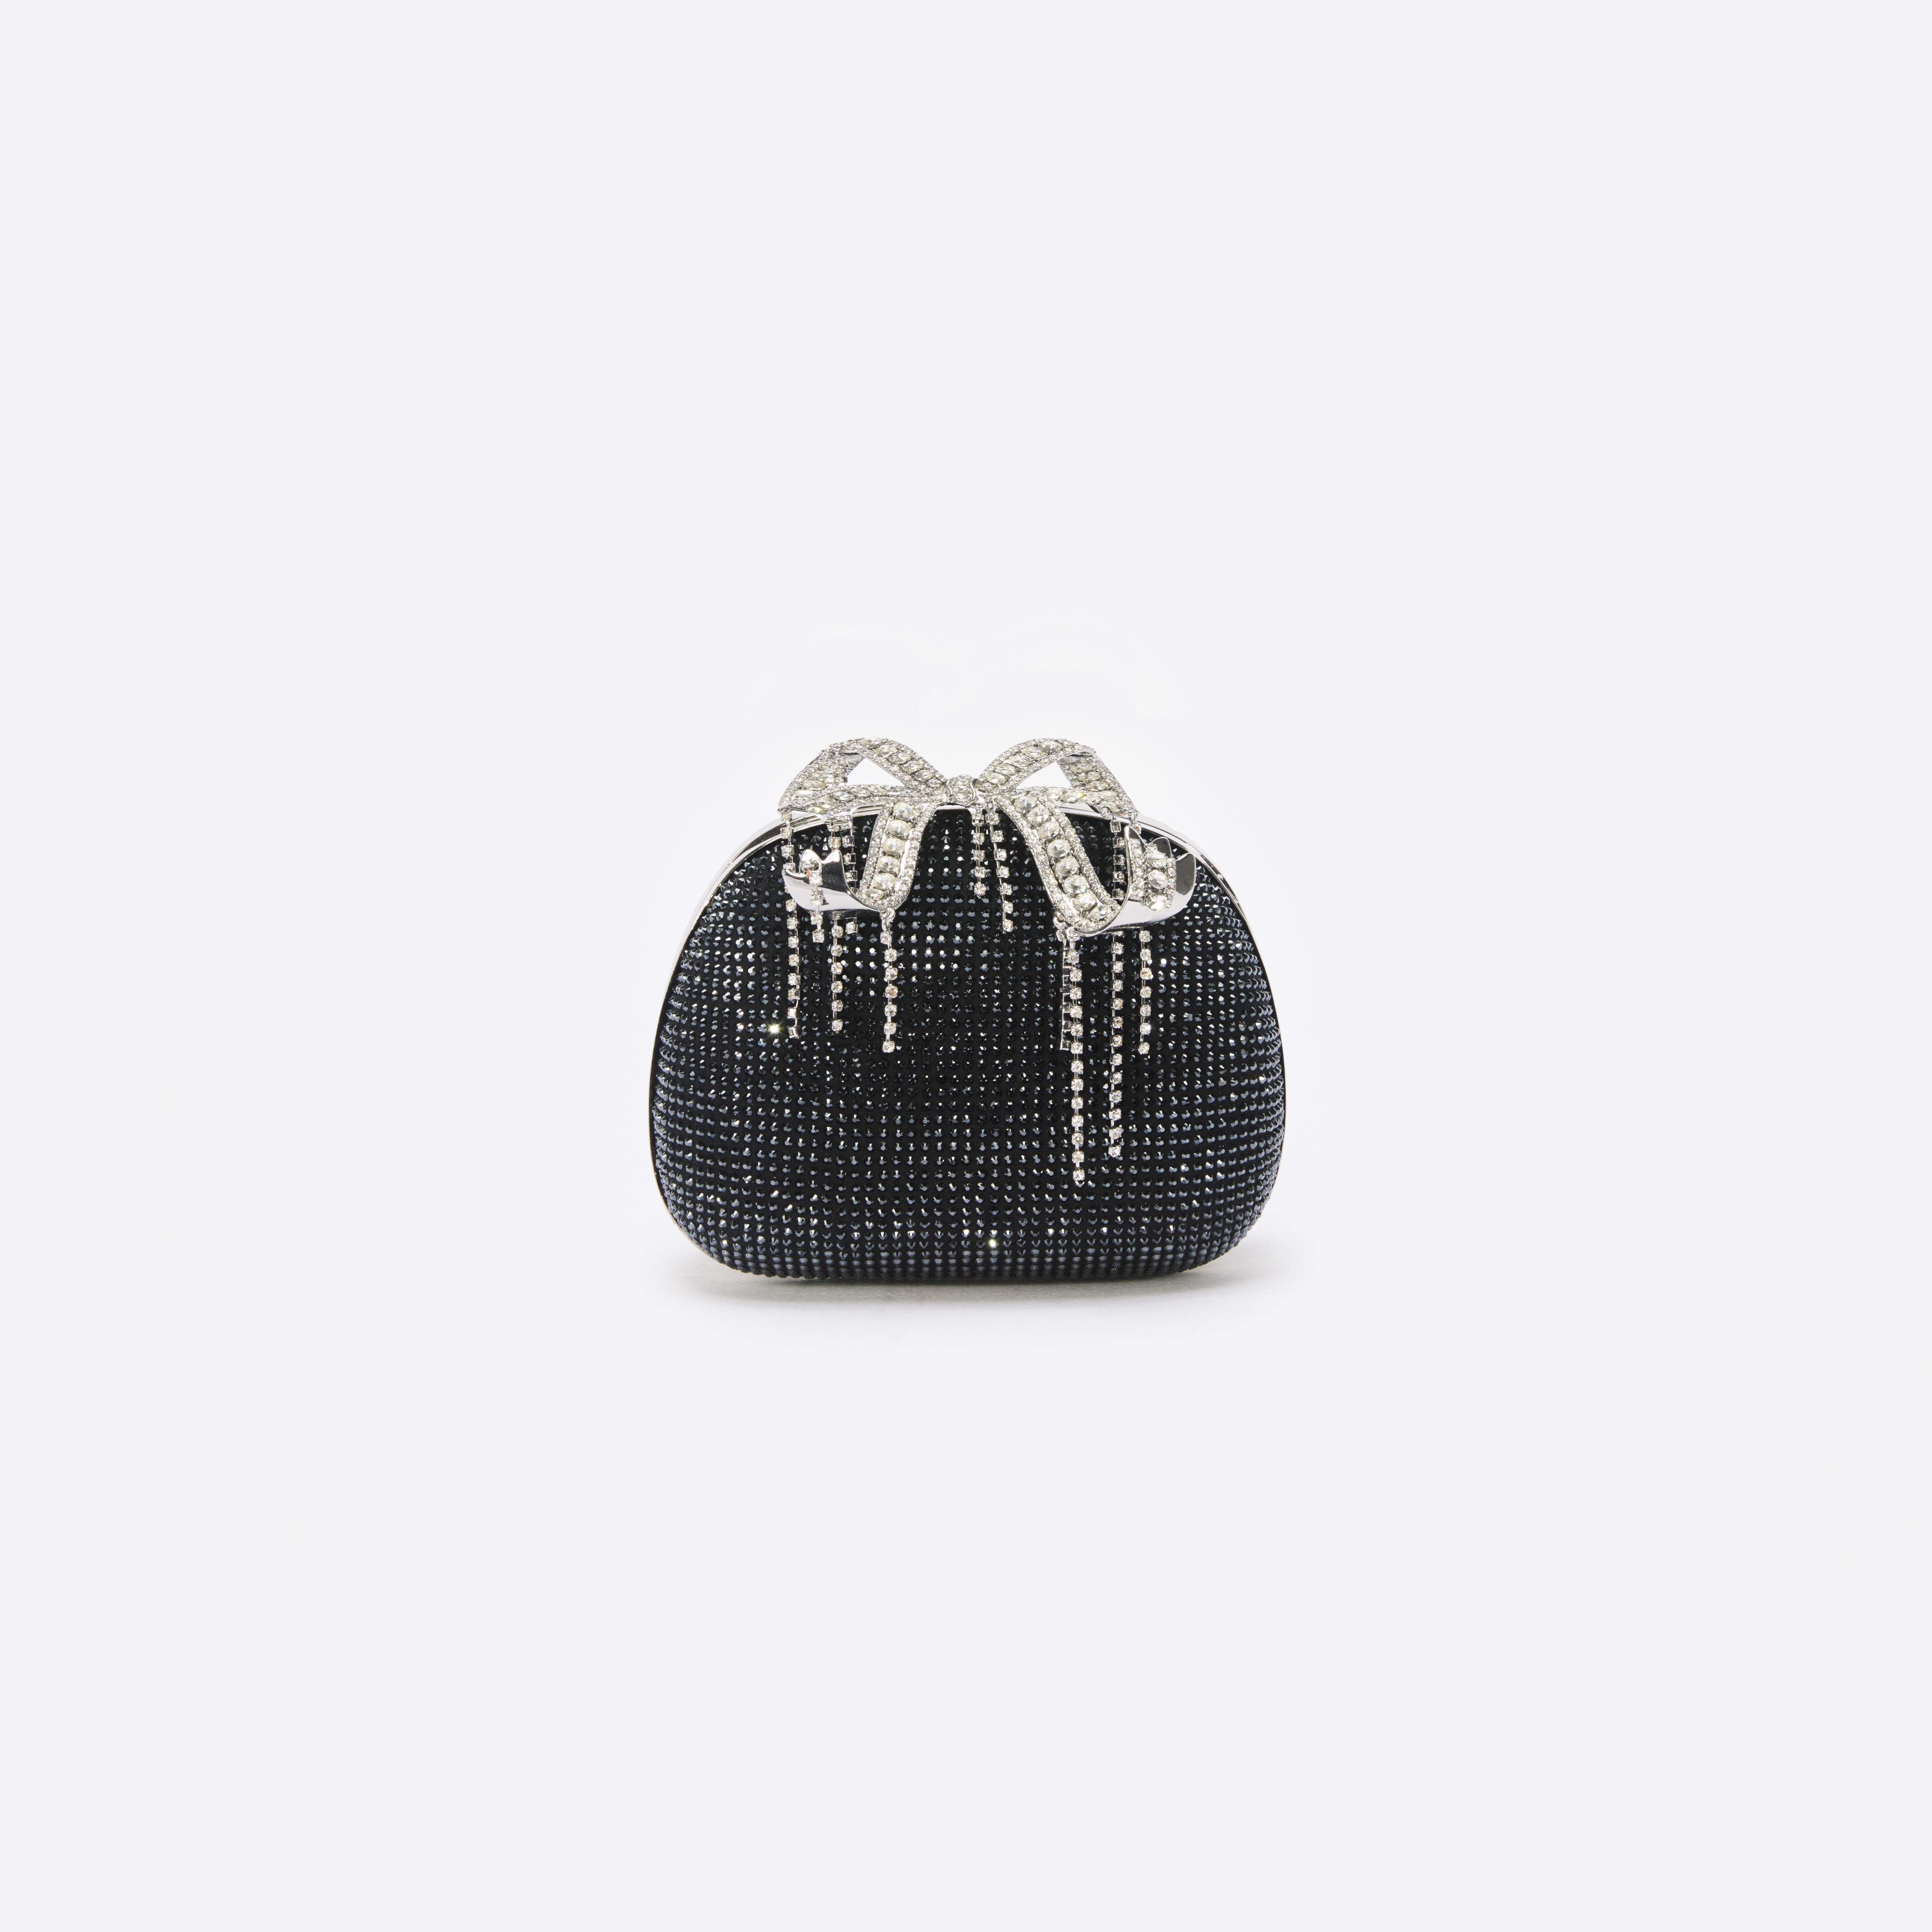 Rhinestone Handbag Purse Black Clutch Purses for Women Evening Shoulder  Diamond Purse Bling Crystal Bag purses - Walmart.com